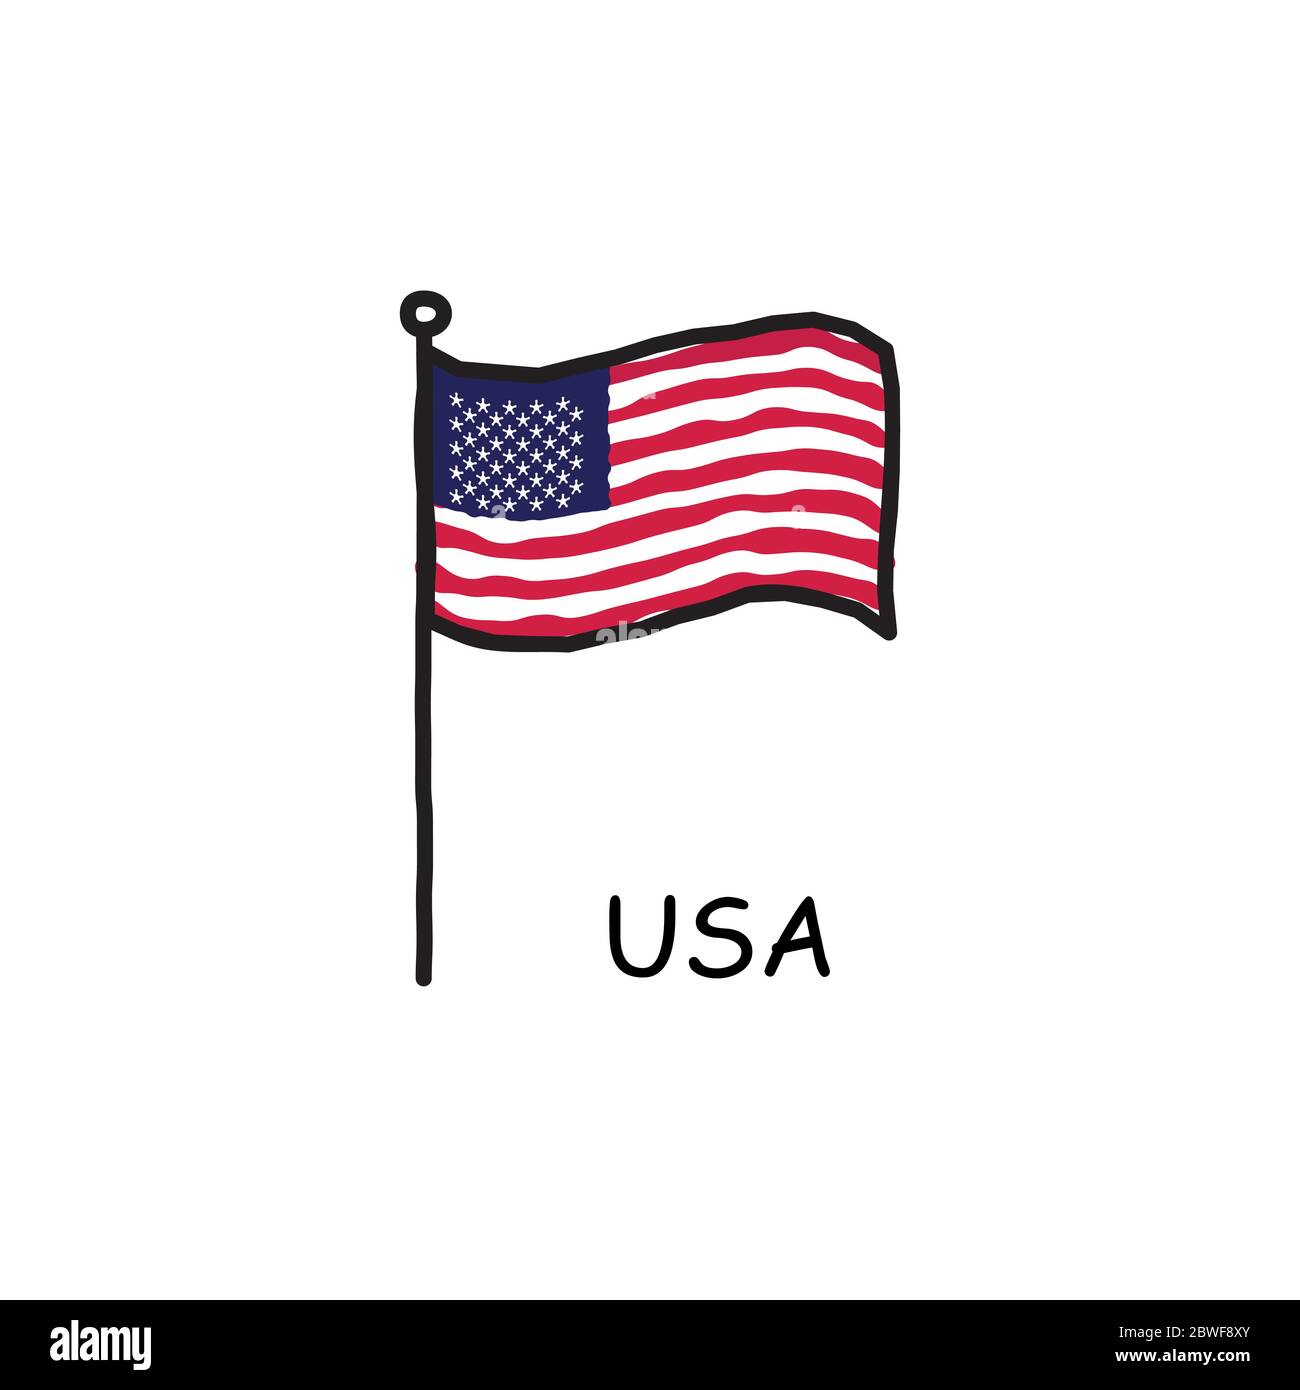 Hand Drawn Sketchy Usa Flag On The Flag Pole Stock Vector Illustration